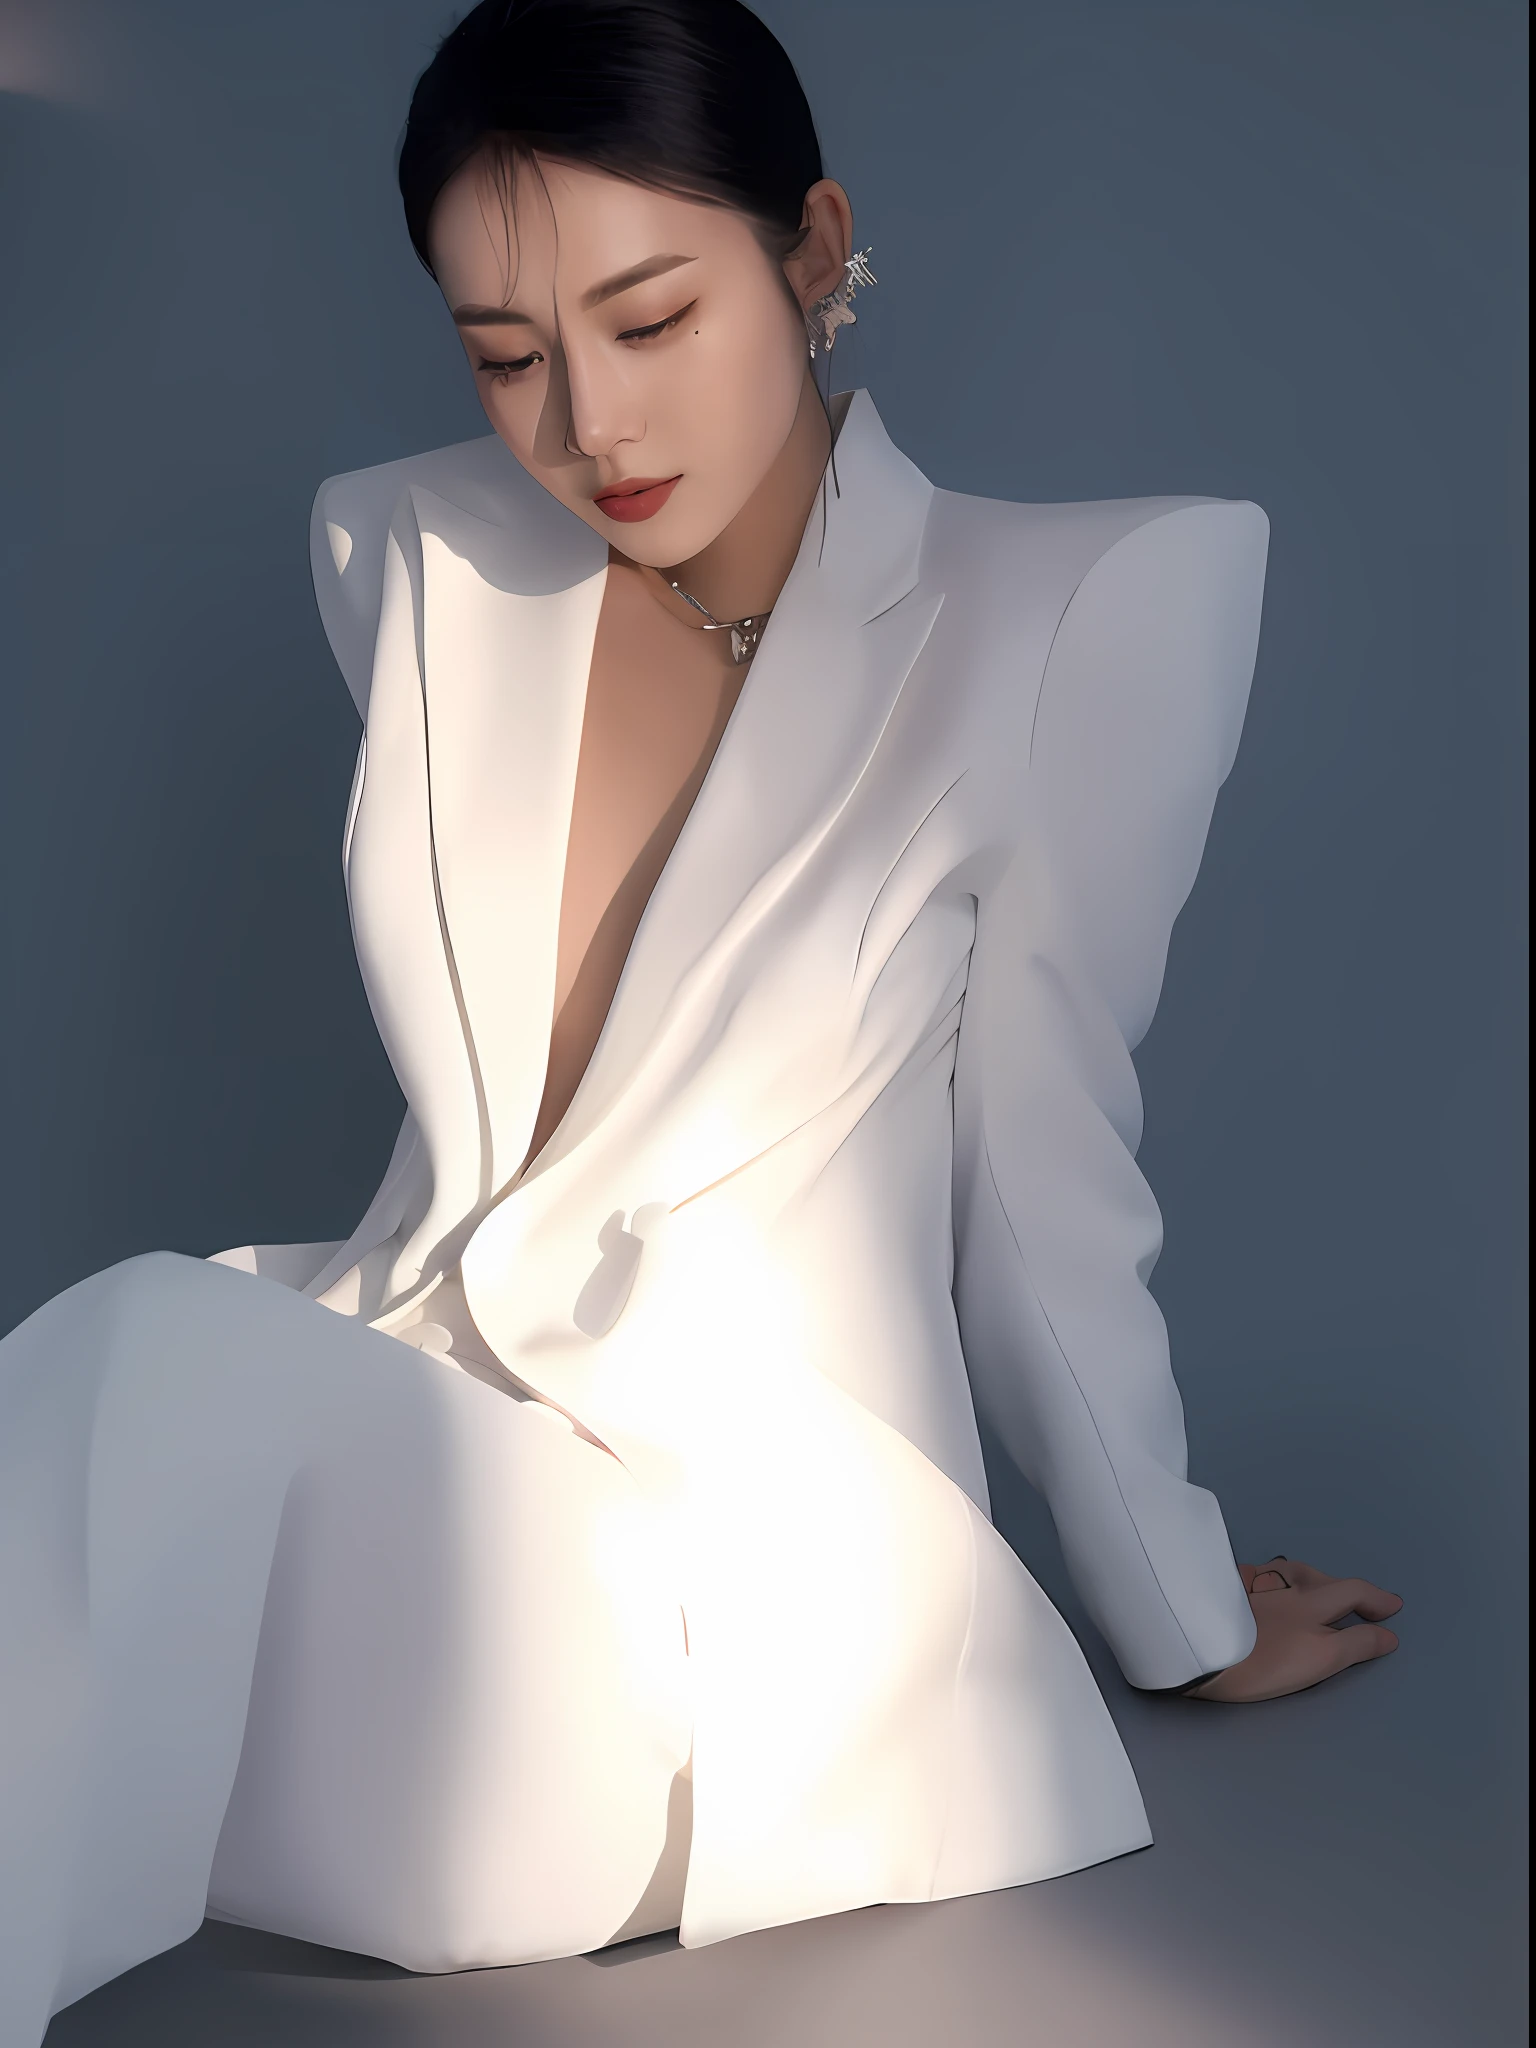 Premium Photo  Portrait of a beautiful woman wearing white futuristic combat  suit